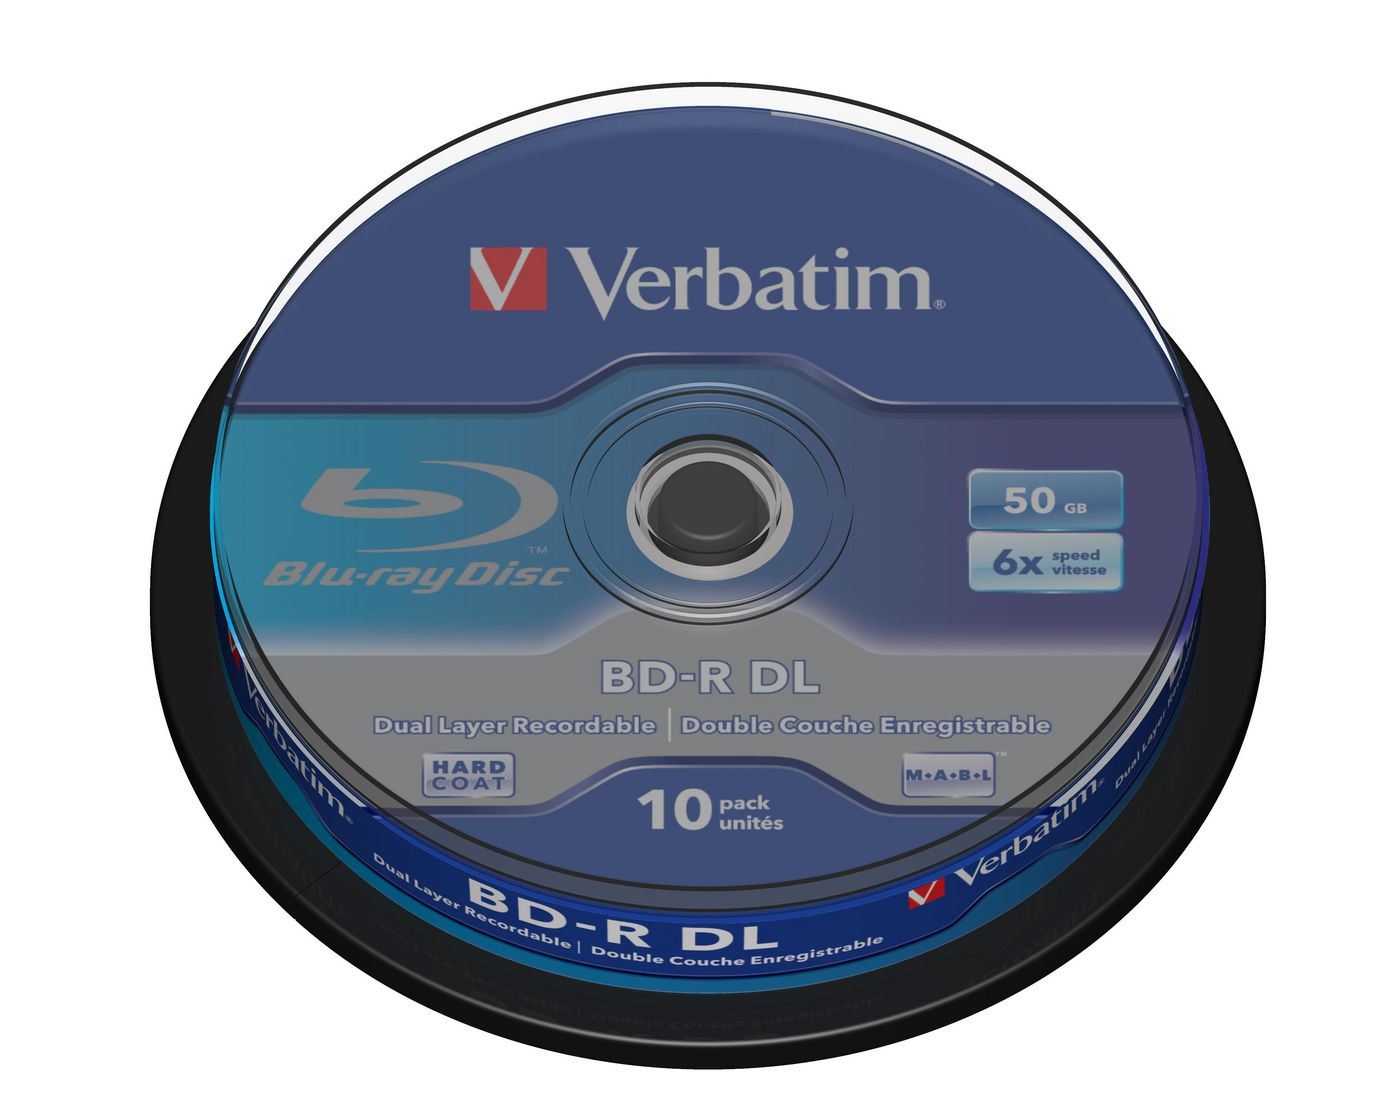 Verbatim 43746 BD-R DL 6X 50GB 10 pack 